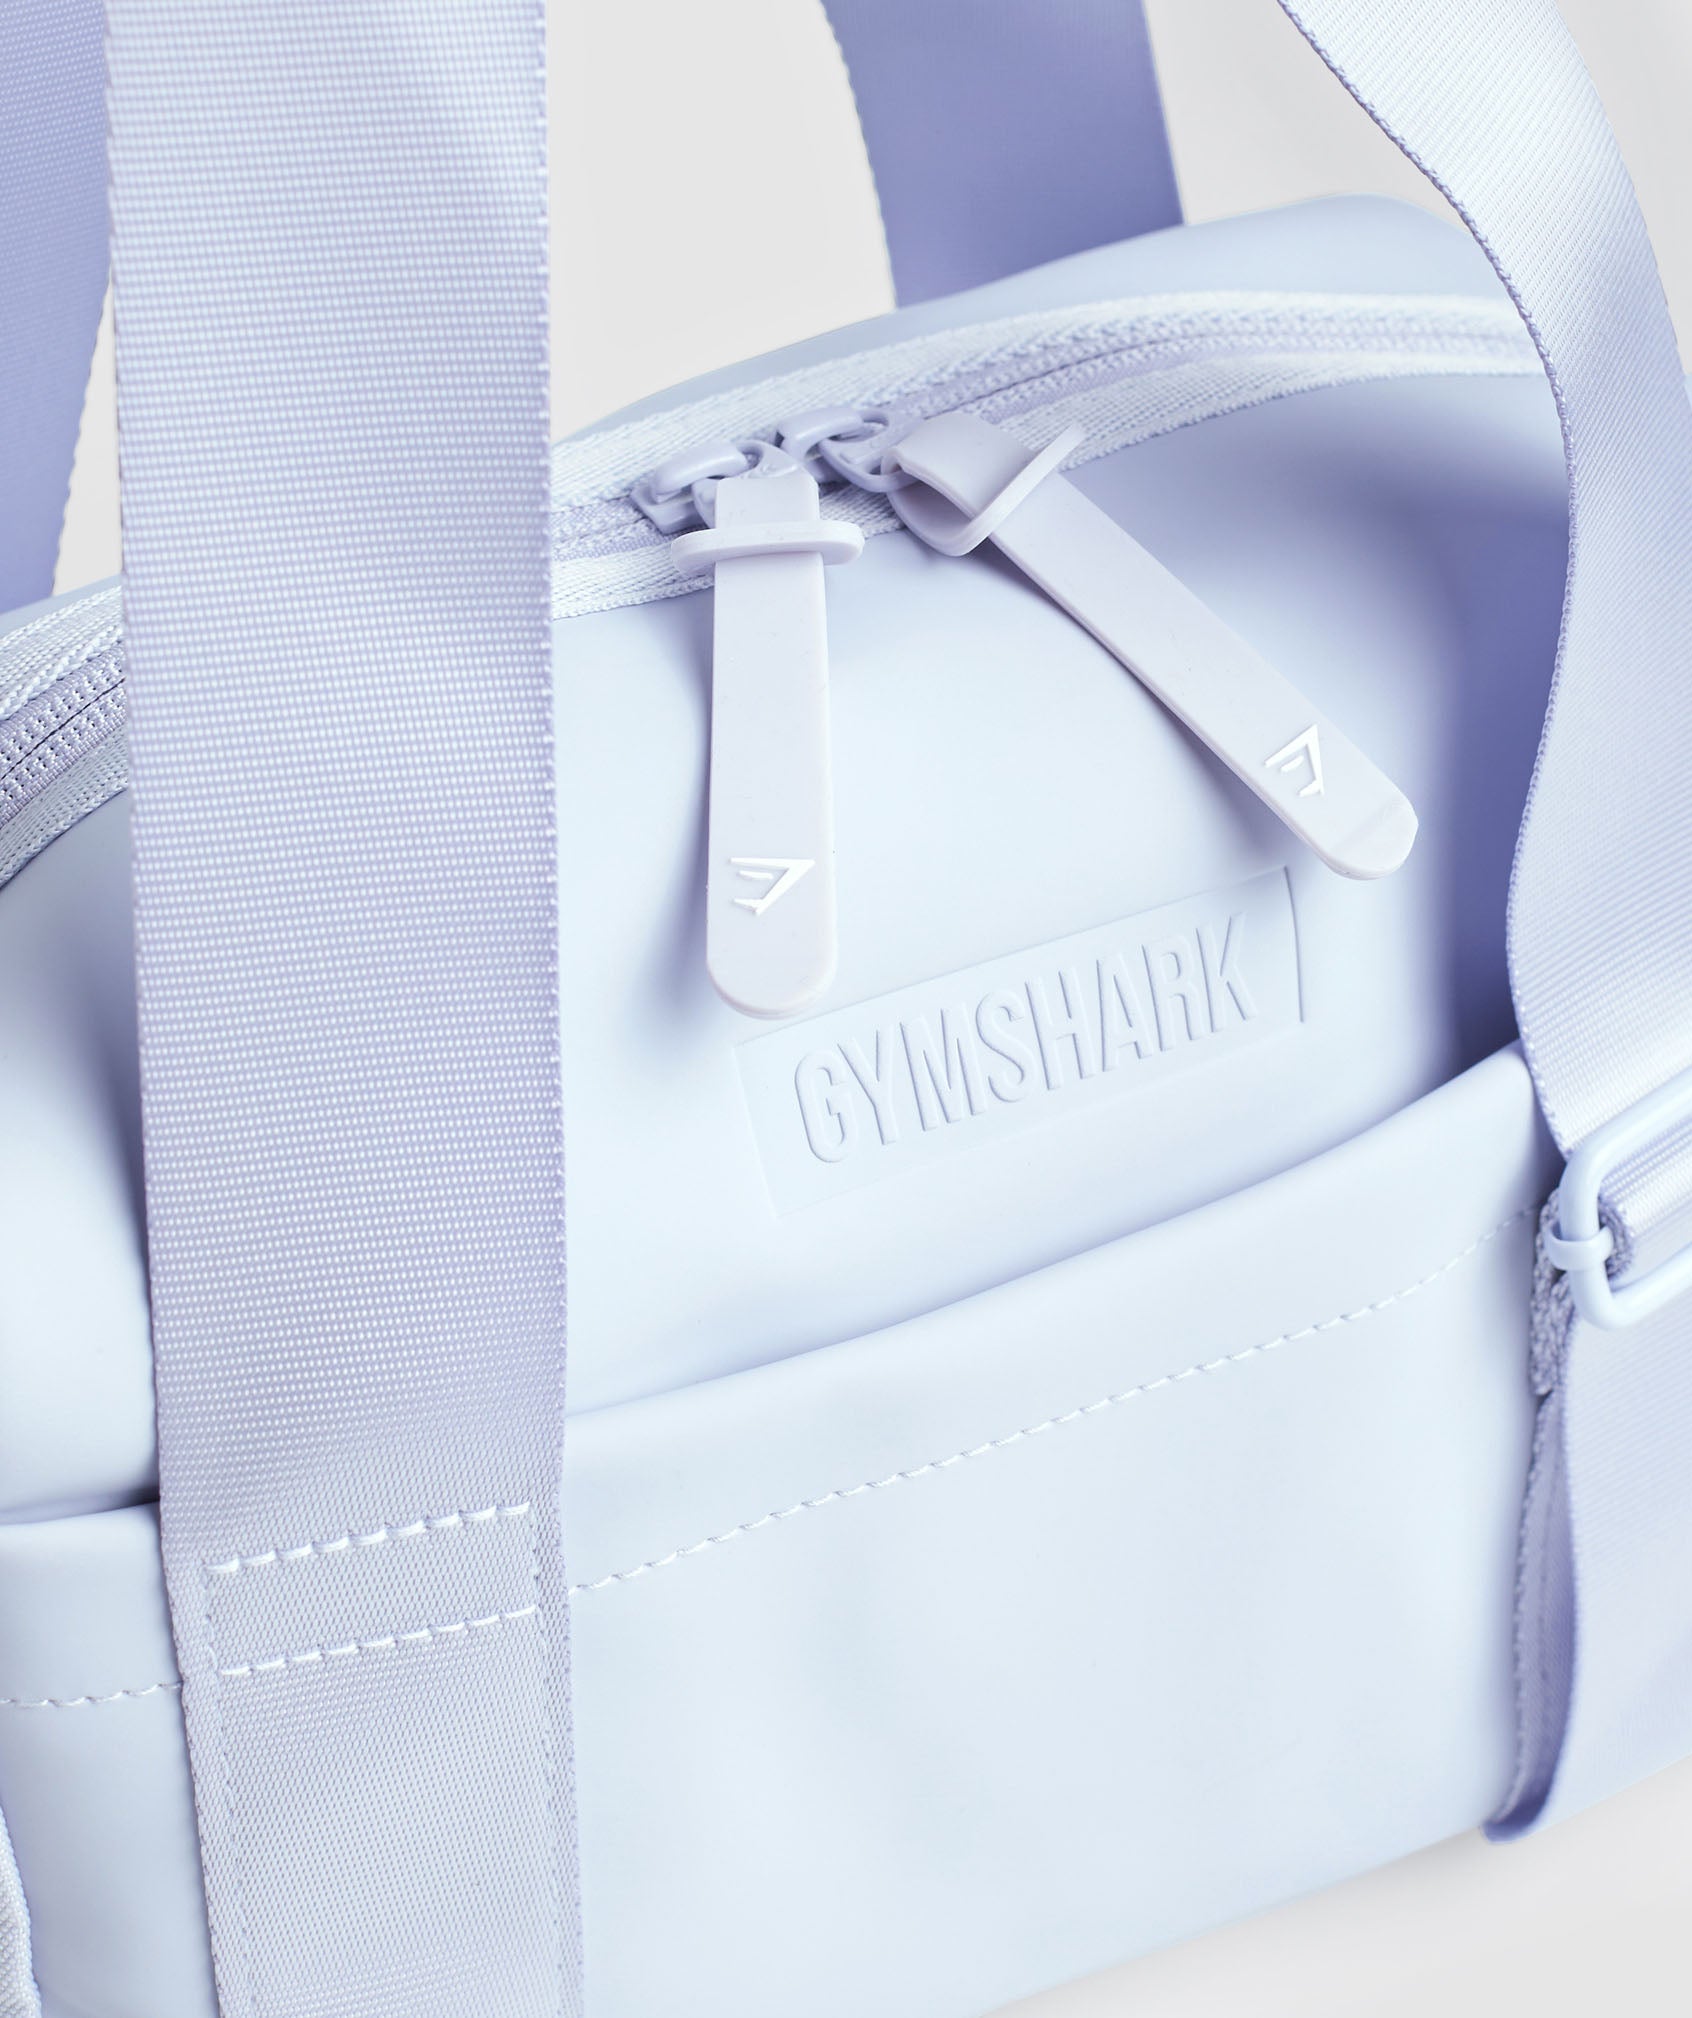 Gymshark Everyday Mini Gym Bag - Silver Lilac